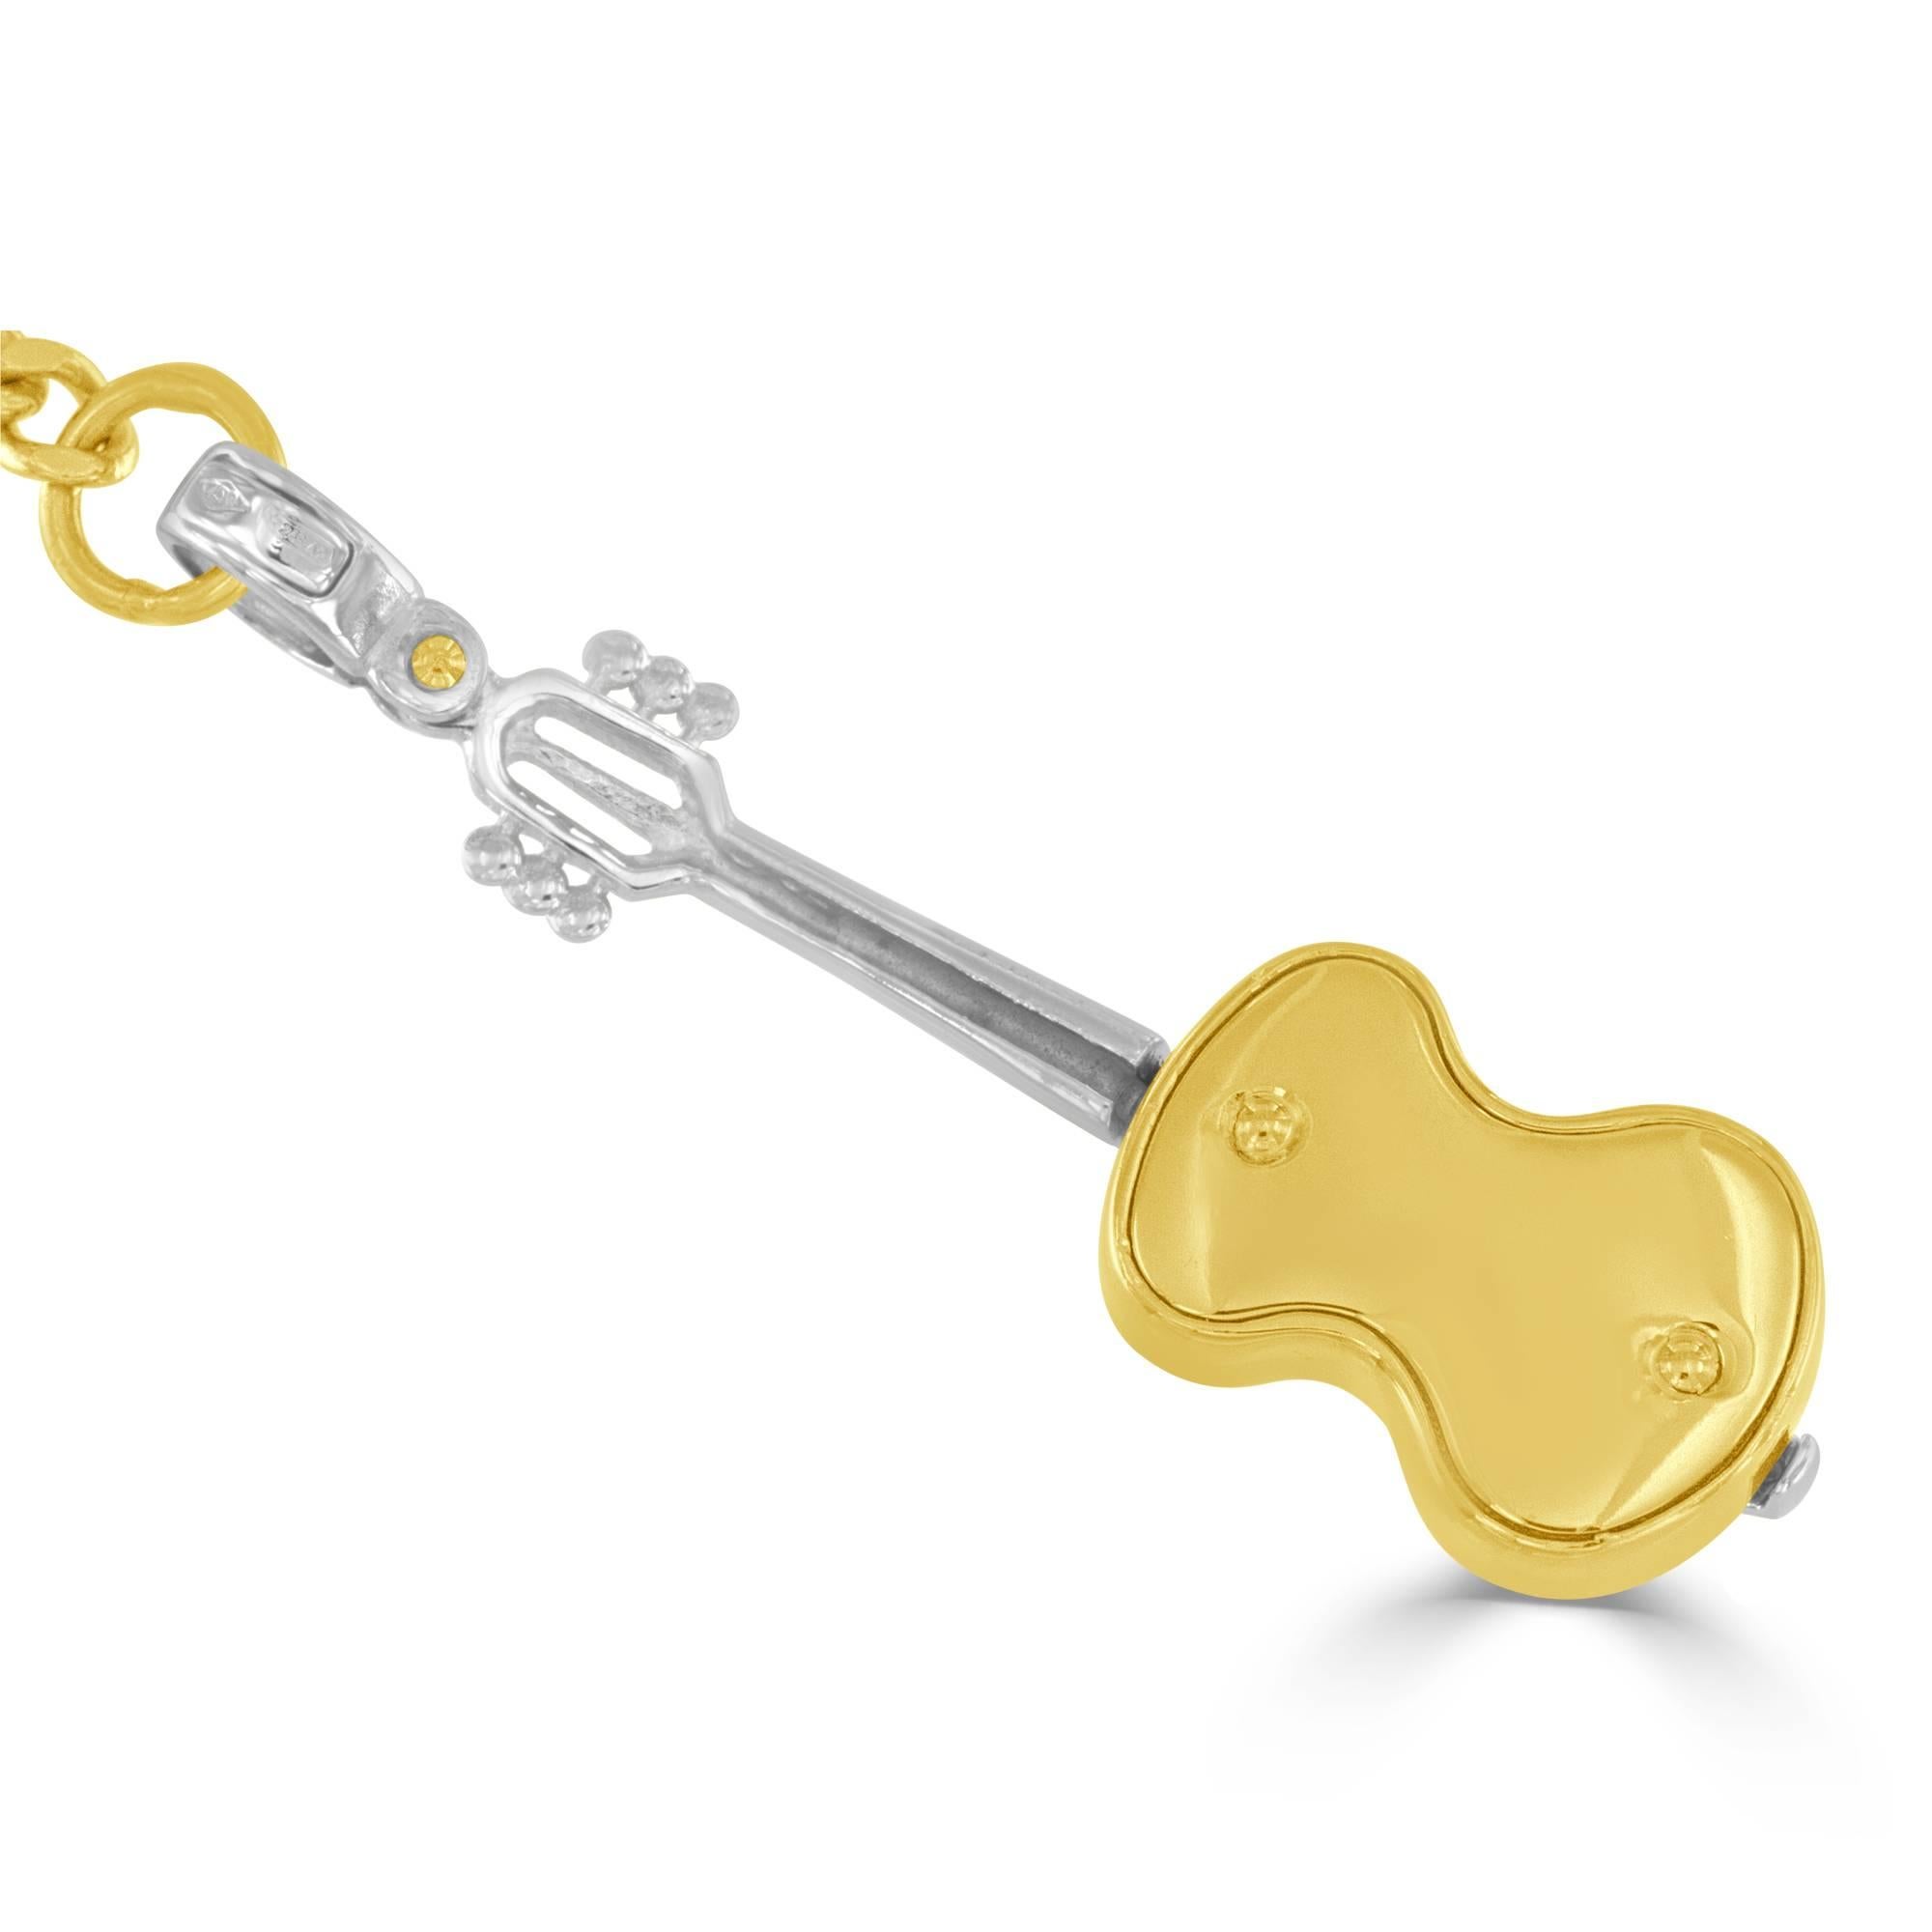 Modern Gold Violin Key Chain For Sale